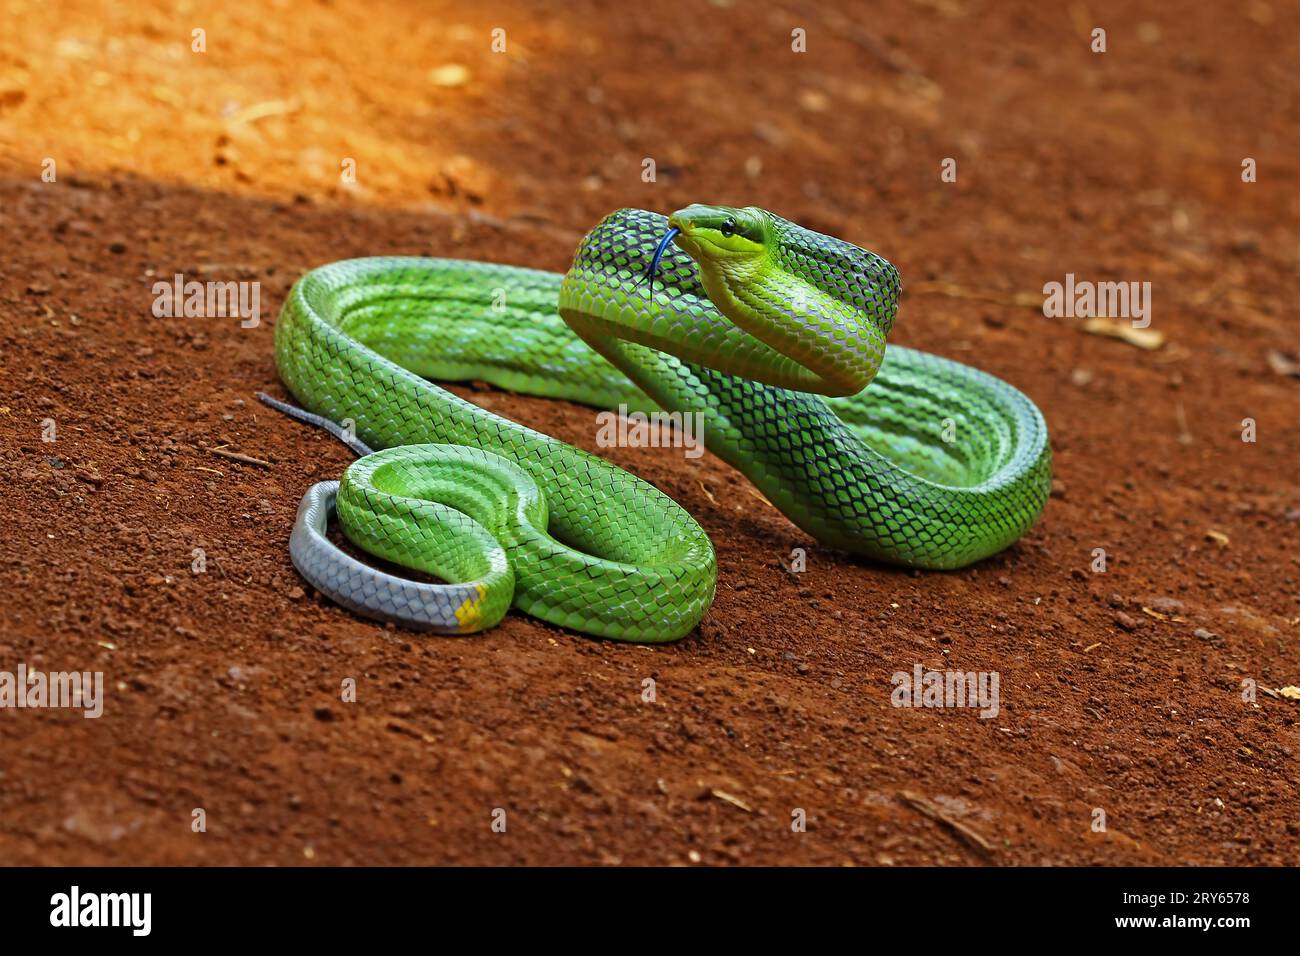 Die grüne Schlange Gonyosoma oxycephalum ist bereit anzugreifen Stockfoto